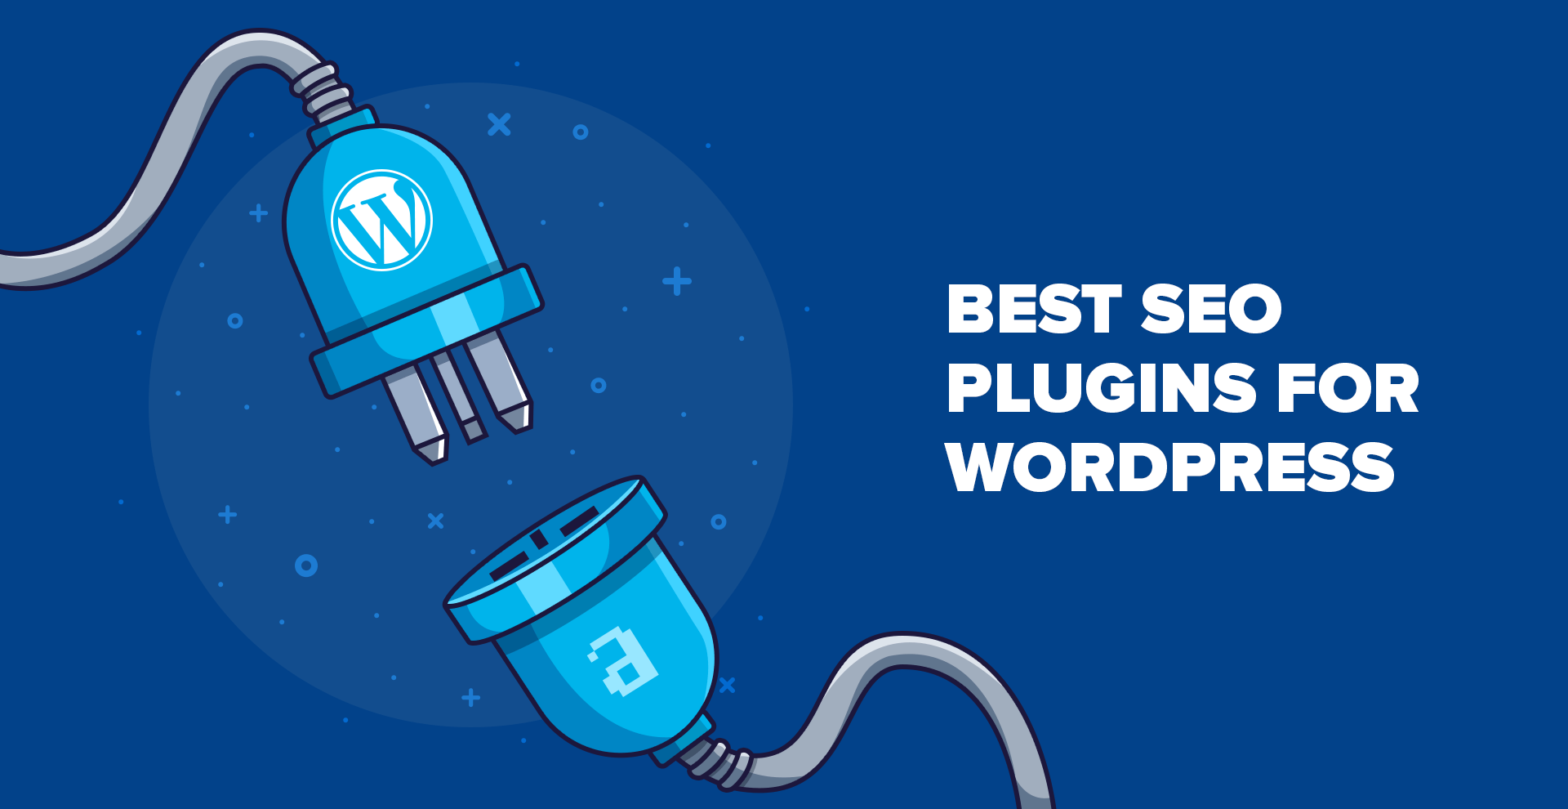 seo-plugins-best-wordpress